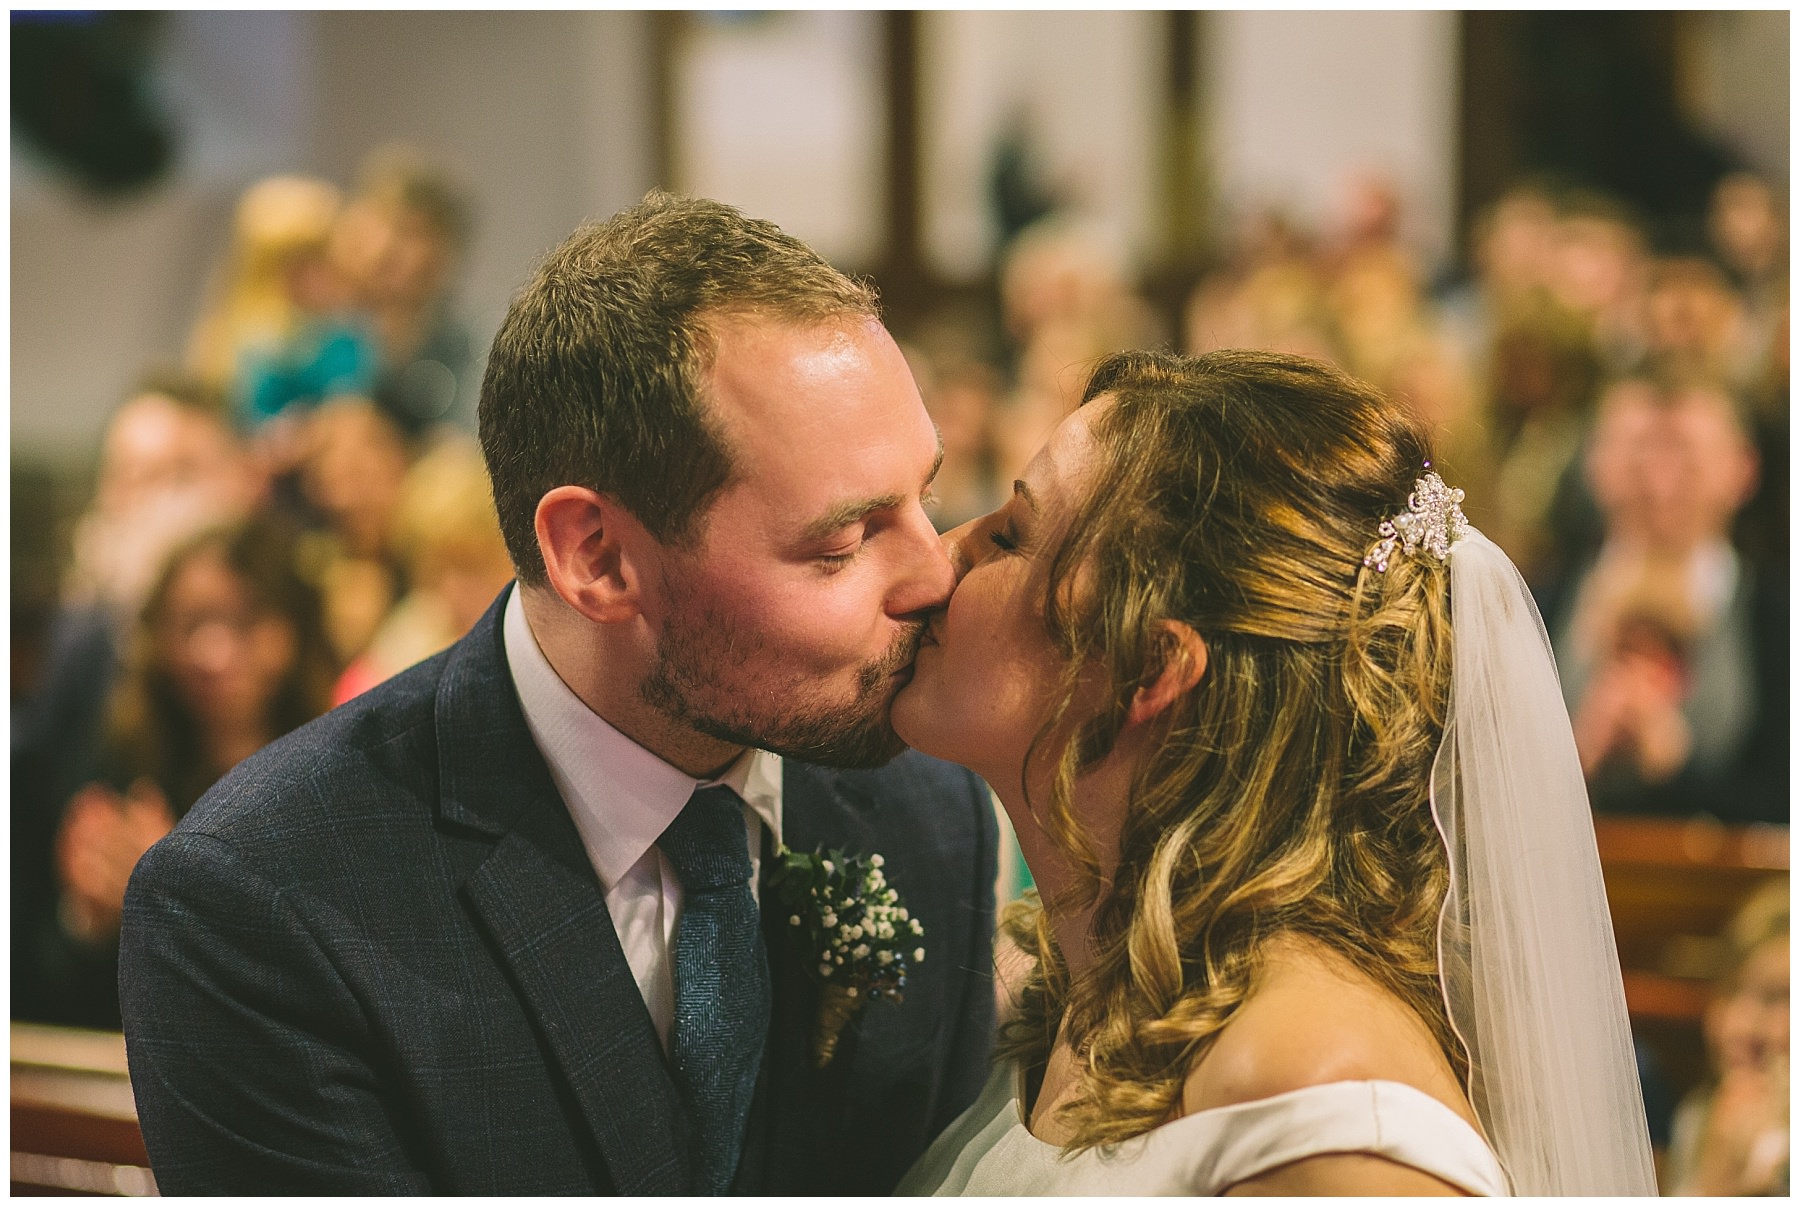 First kiss during church wedding in Ramsbottom